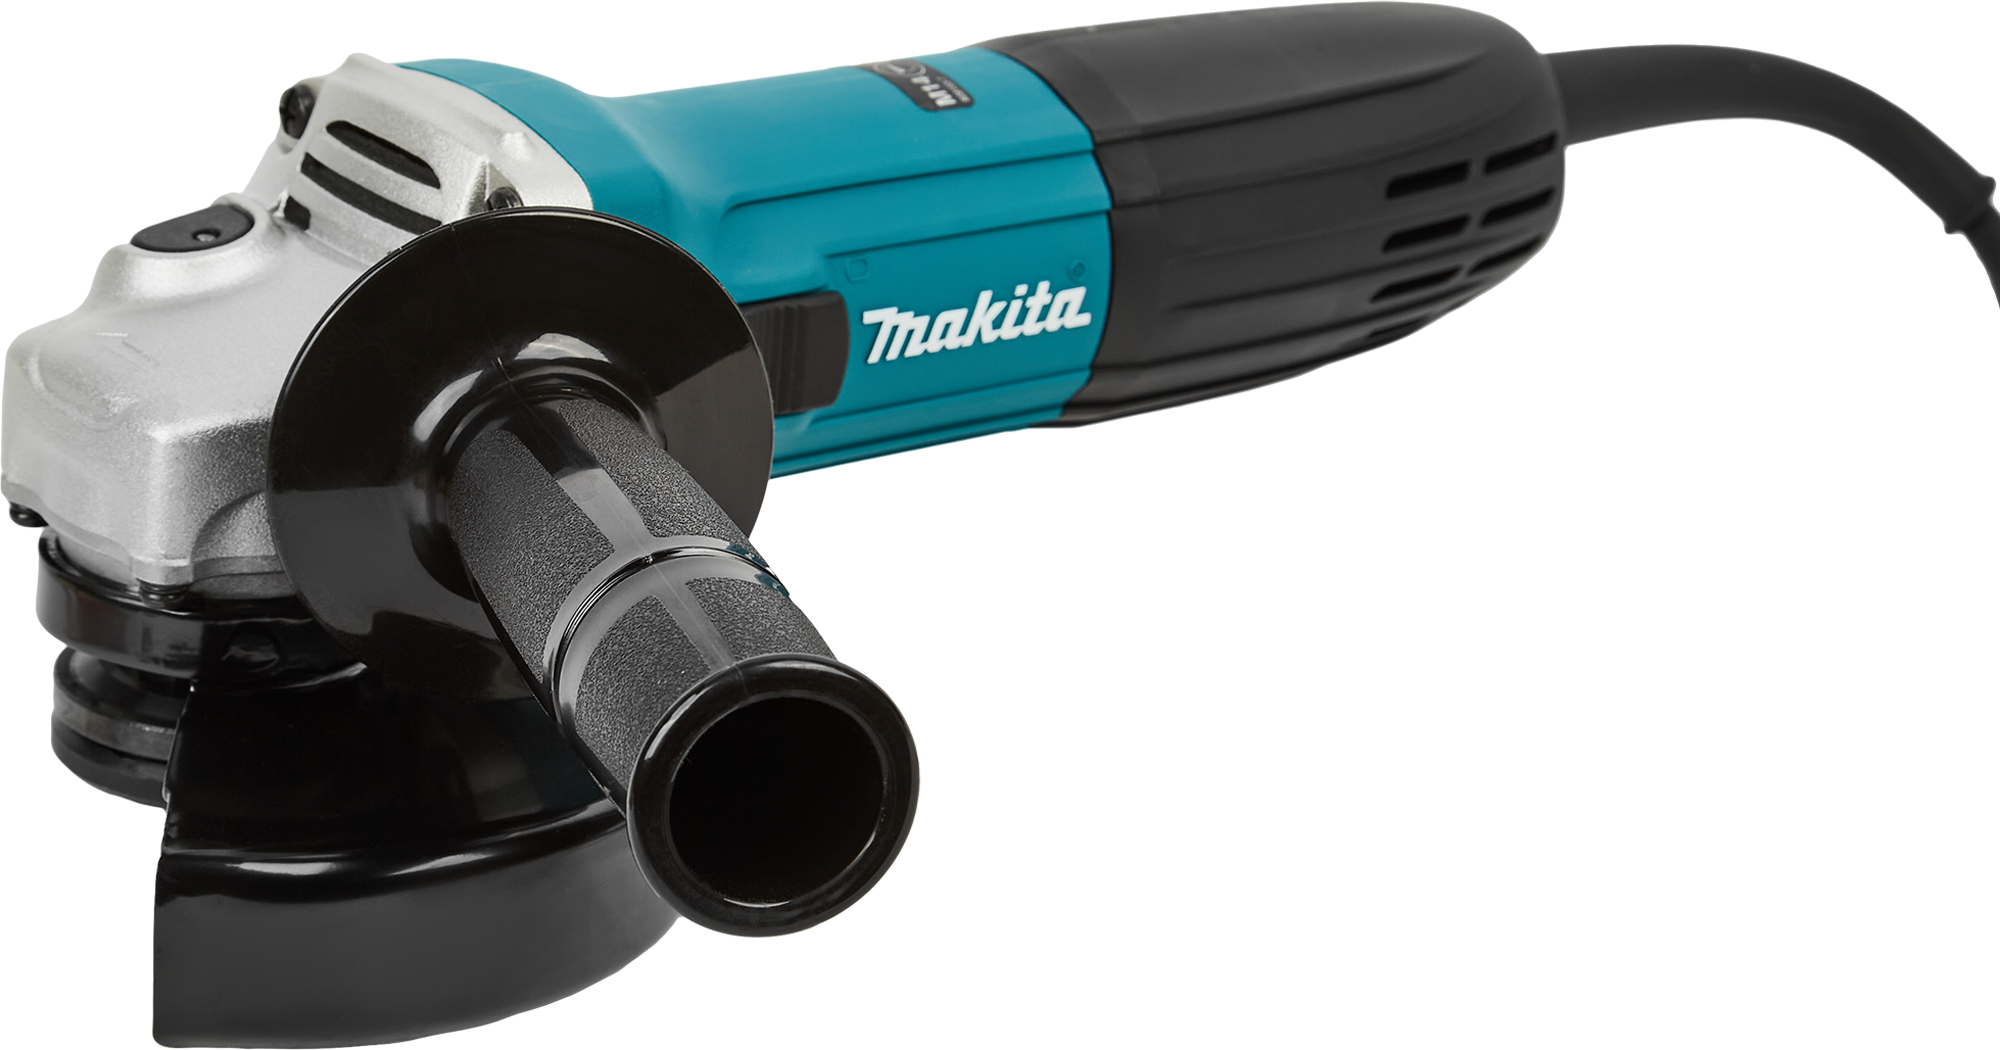 УШМ сетевая Makita 5030 GA, 720 Вт, 125 мм ️  по цене 7350 ₽/шт .